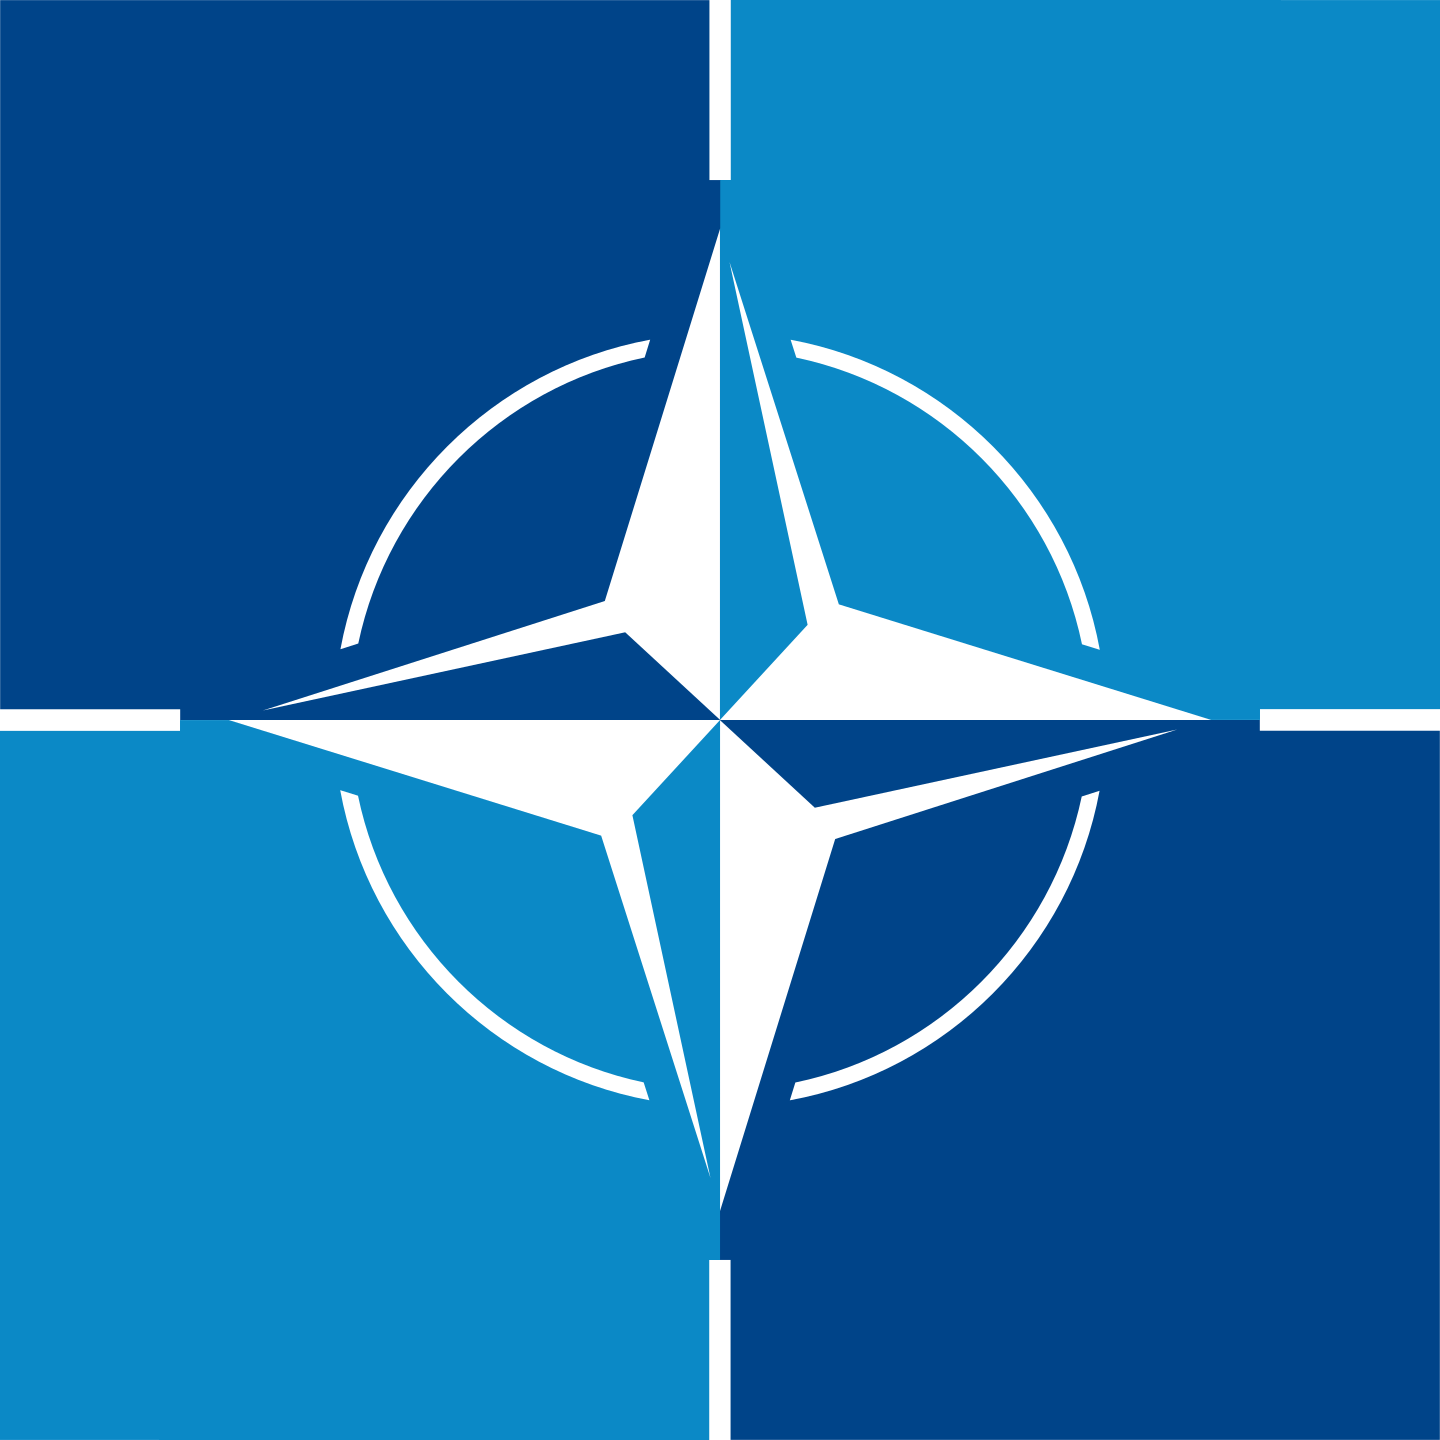 nato otan logo 6 - Otan Logo - Nato Logo